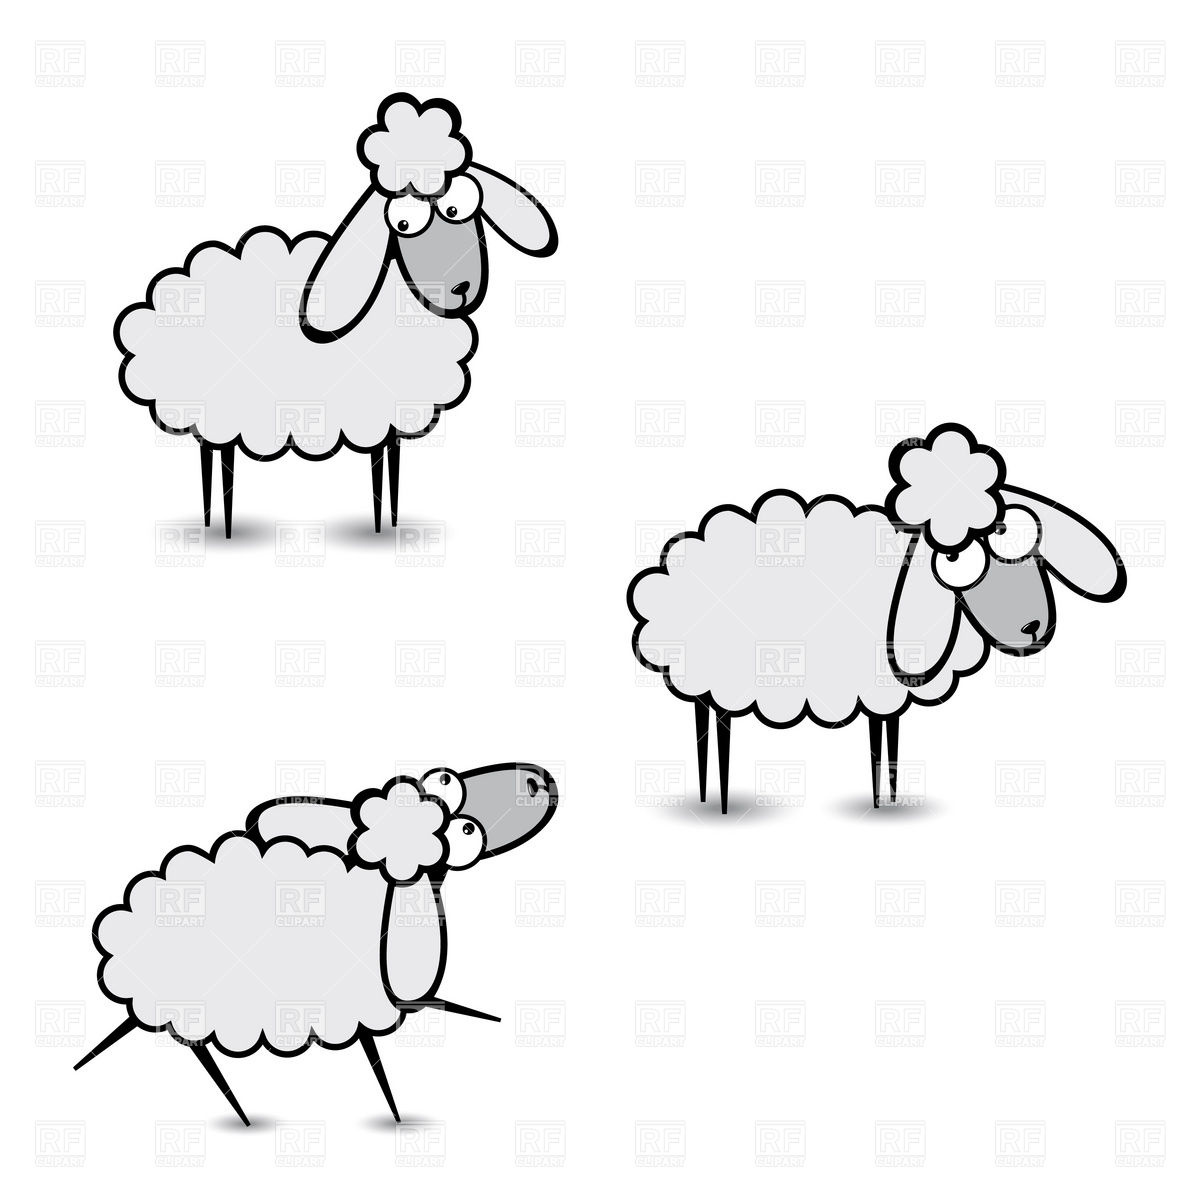 Funny Cartoon Sheep Character Download Royalty Free Vector Clipart    